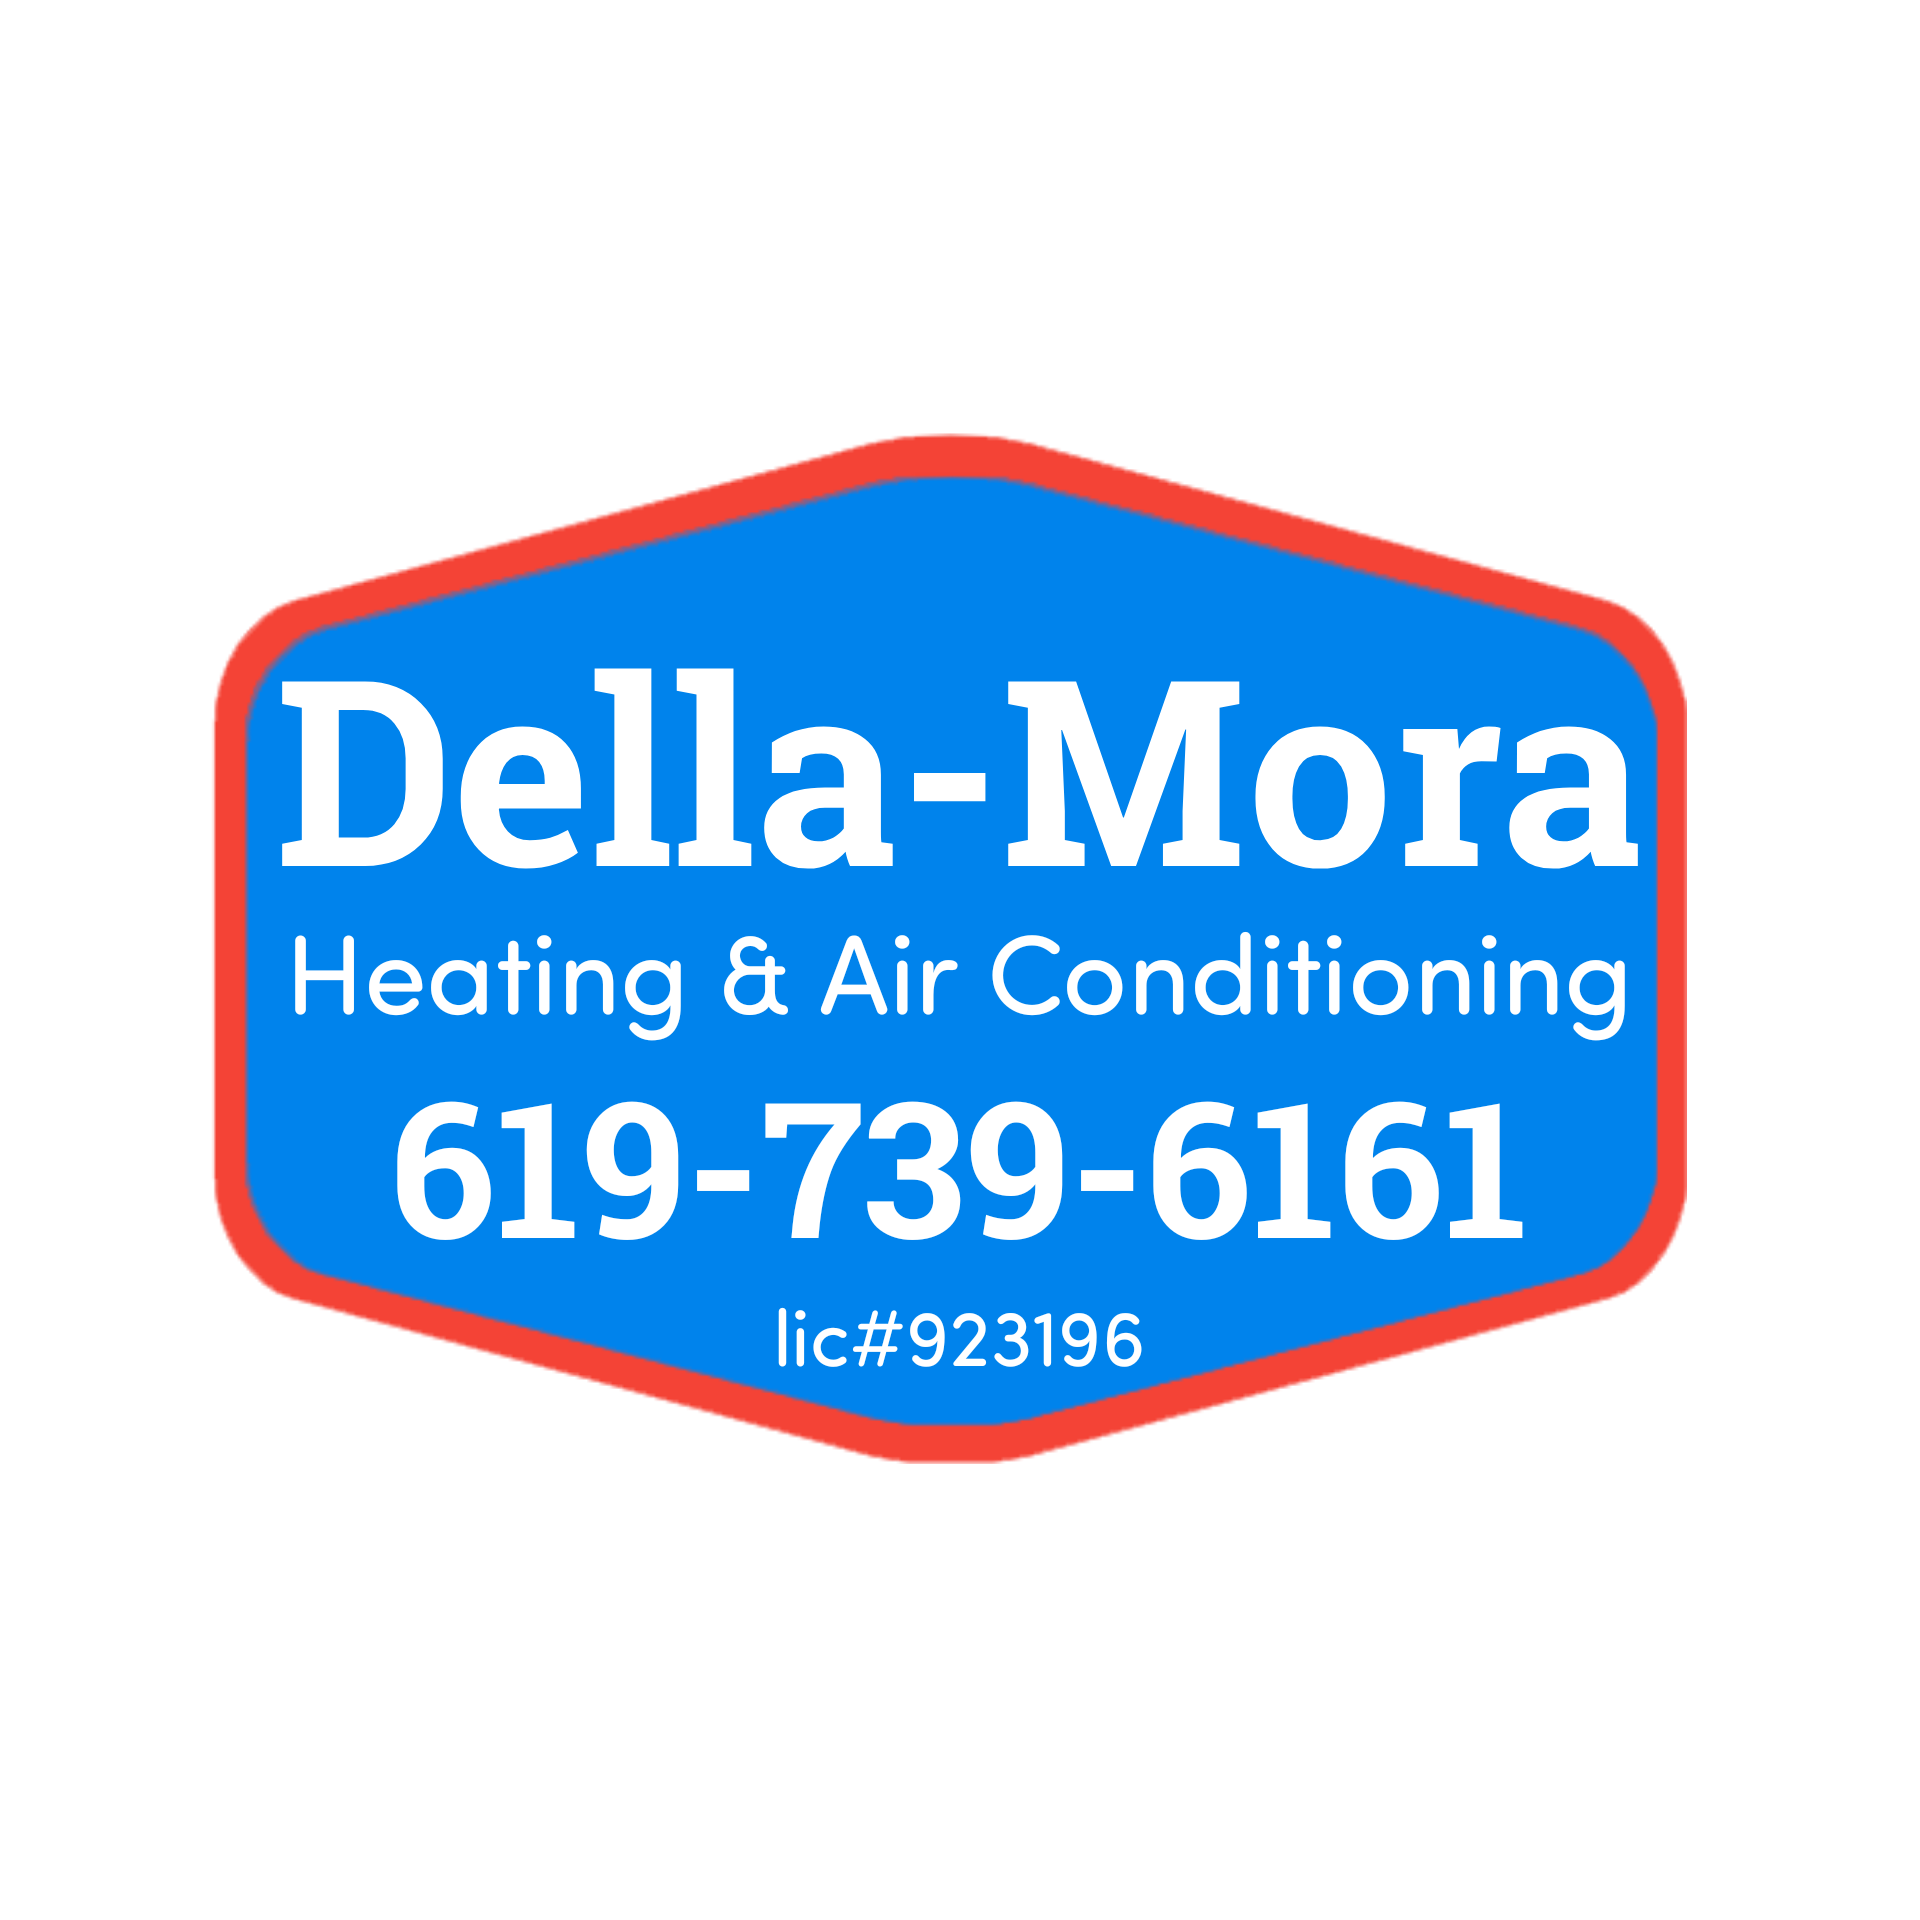 Della-Mora Heating and Air Conditioning Logo